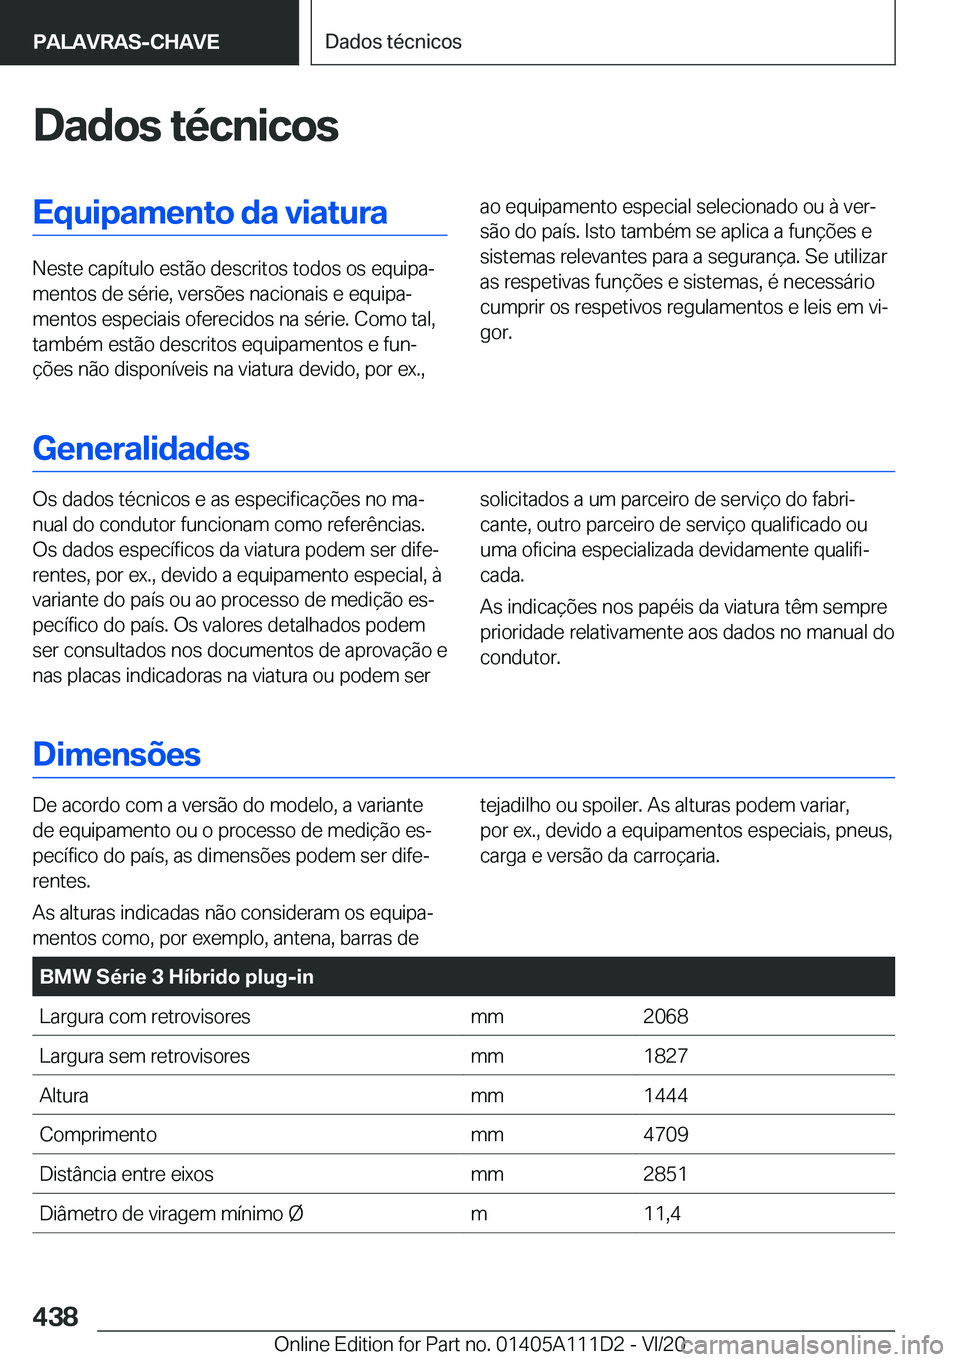 BMW 3 SERIES SEDAN PLUG-IN HYBRID 2021  Manual do condutor (in Portuguese) �D�a�d�o�s��t�é�c�n�i�c�o�s�E�q�u�i�p�a�m�e�n�t�o��d�a��v�i�a�t�u�r�a
�N�e�s�t�e��c�a�p�